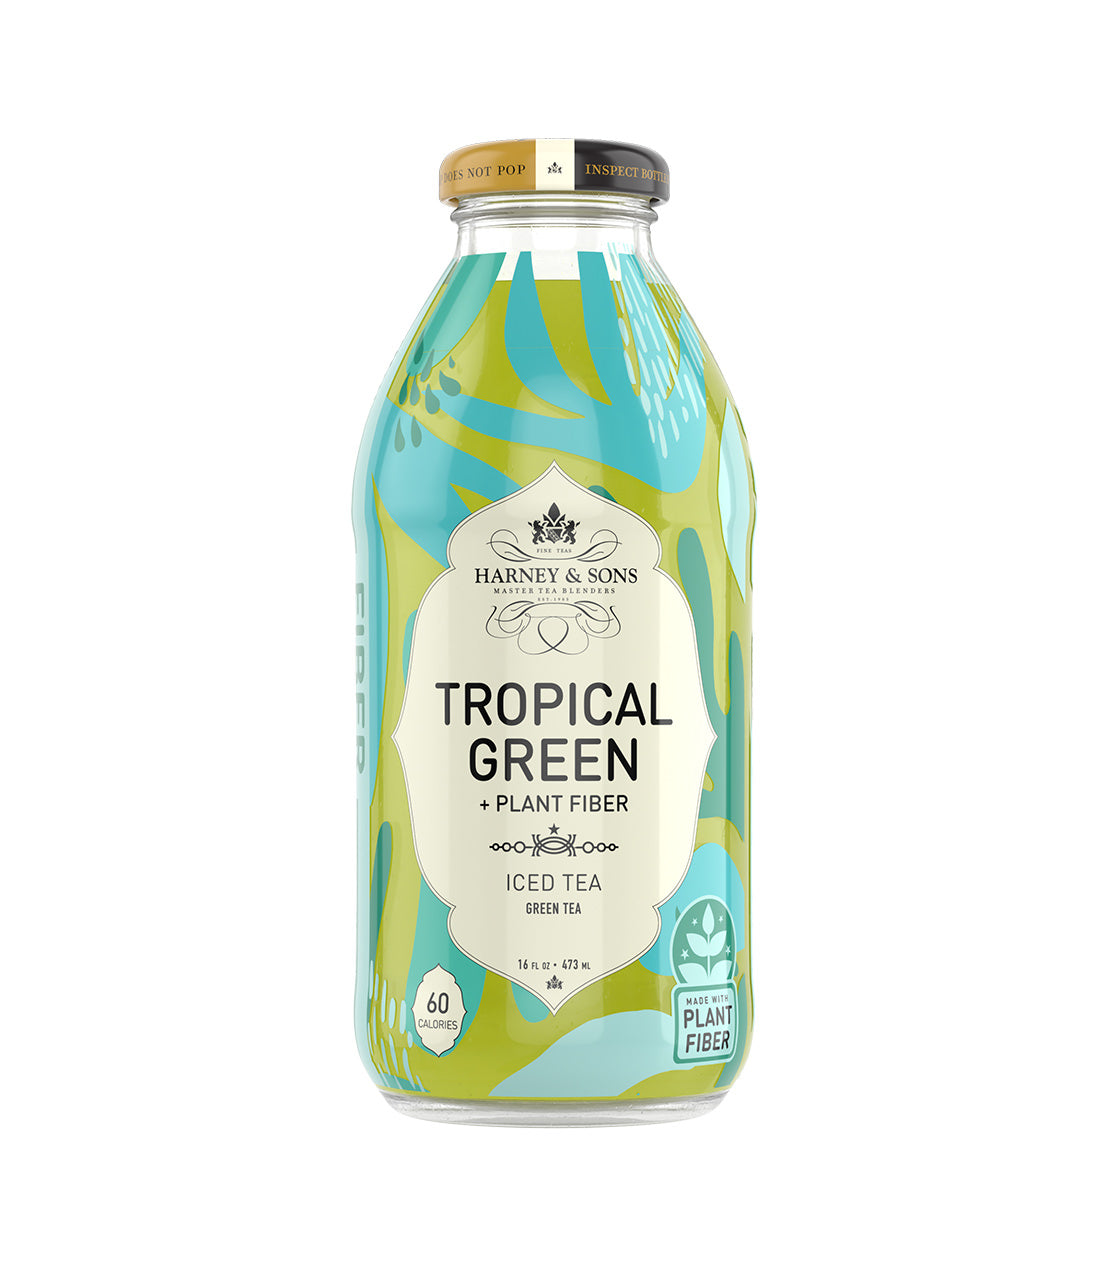 Tropical Green + Plant Fiber Iced Tea